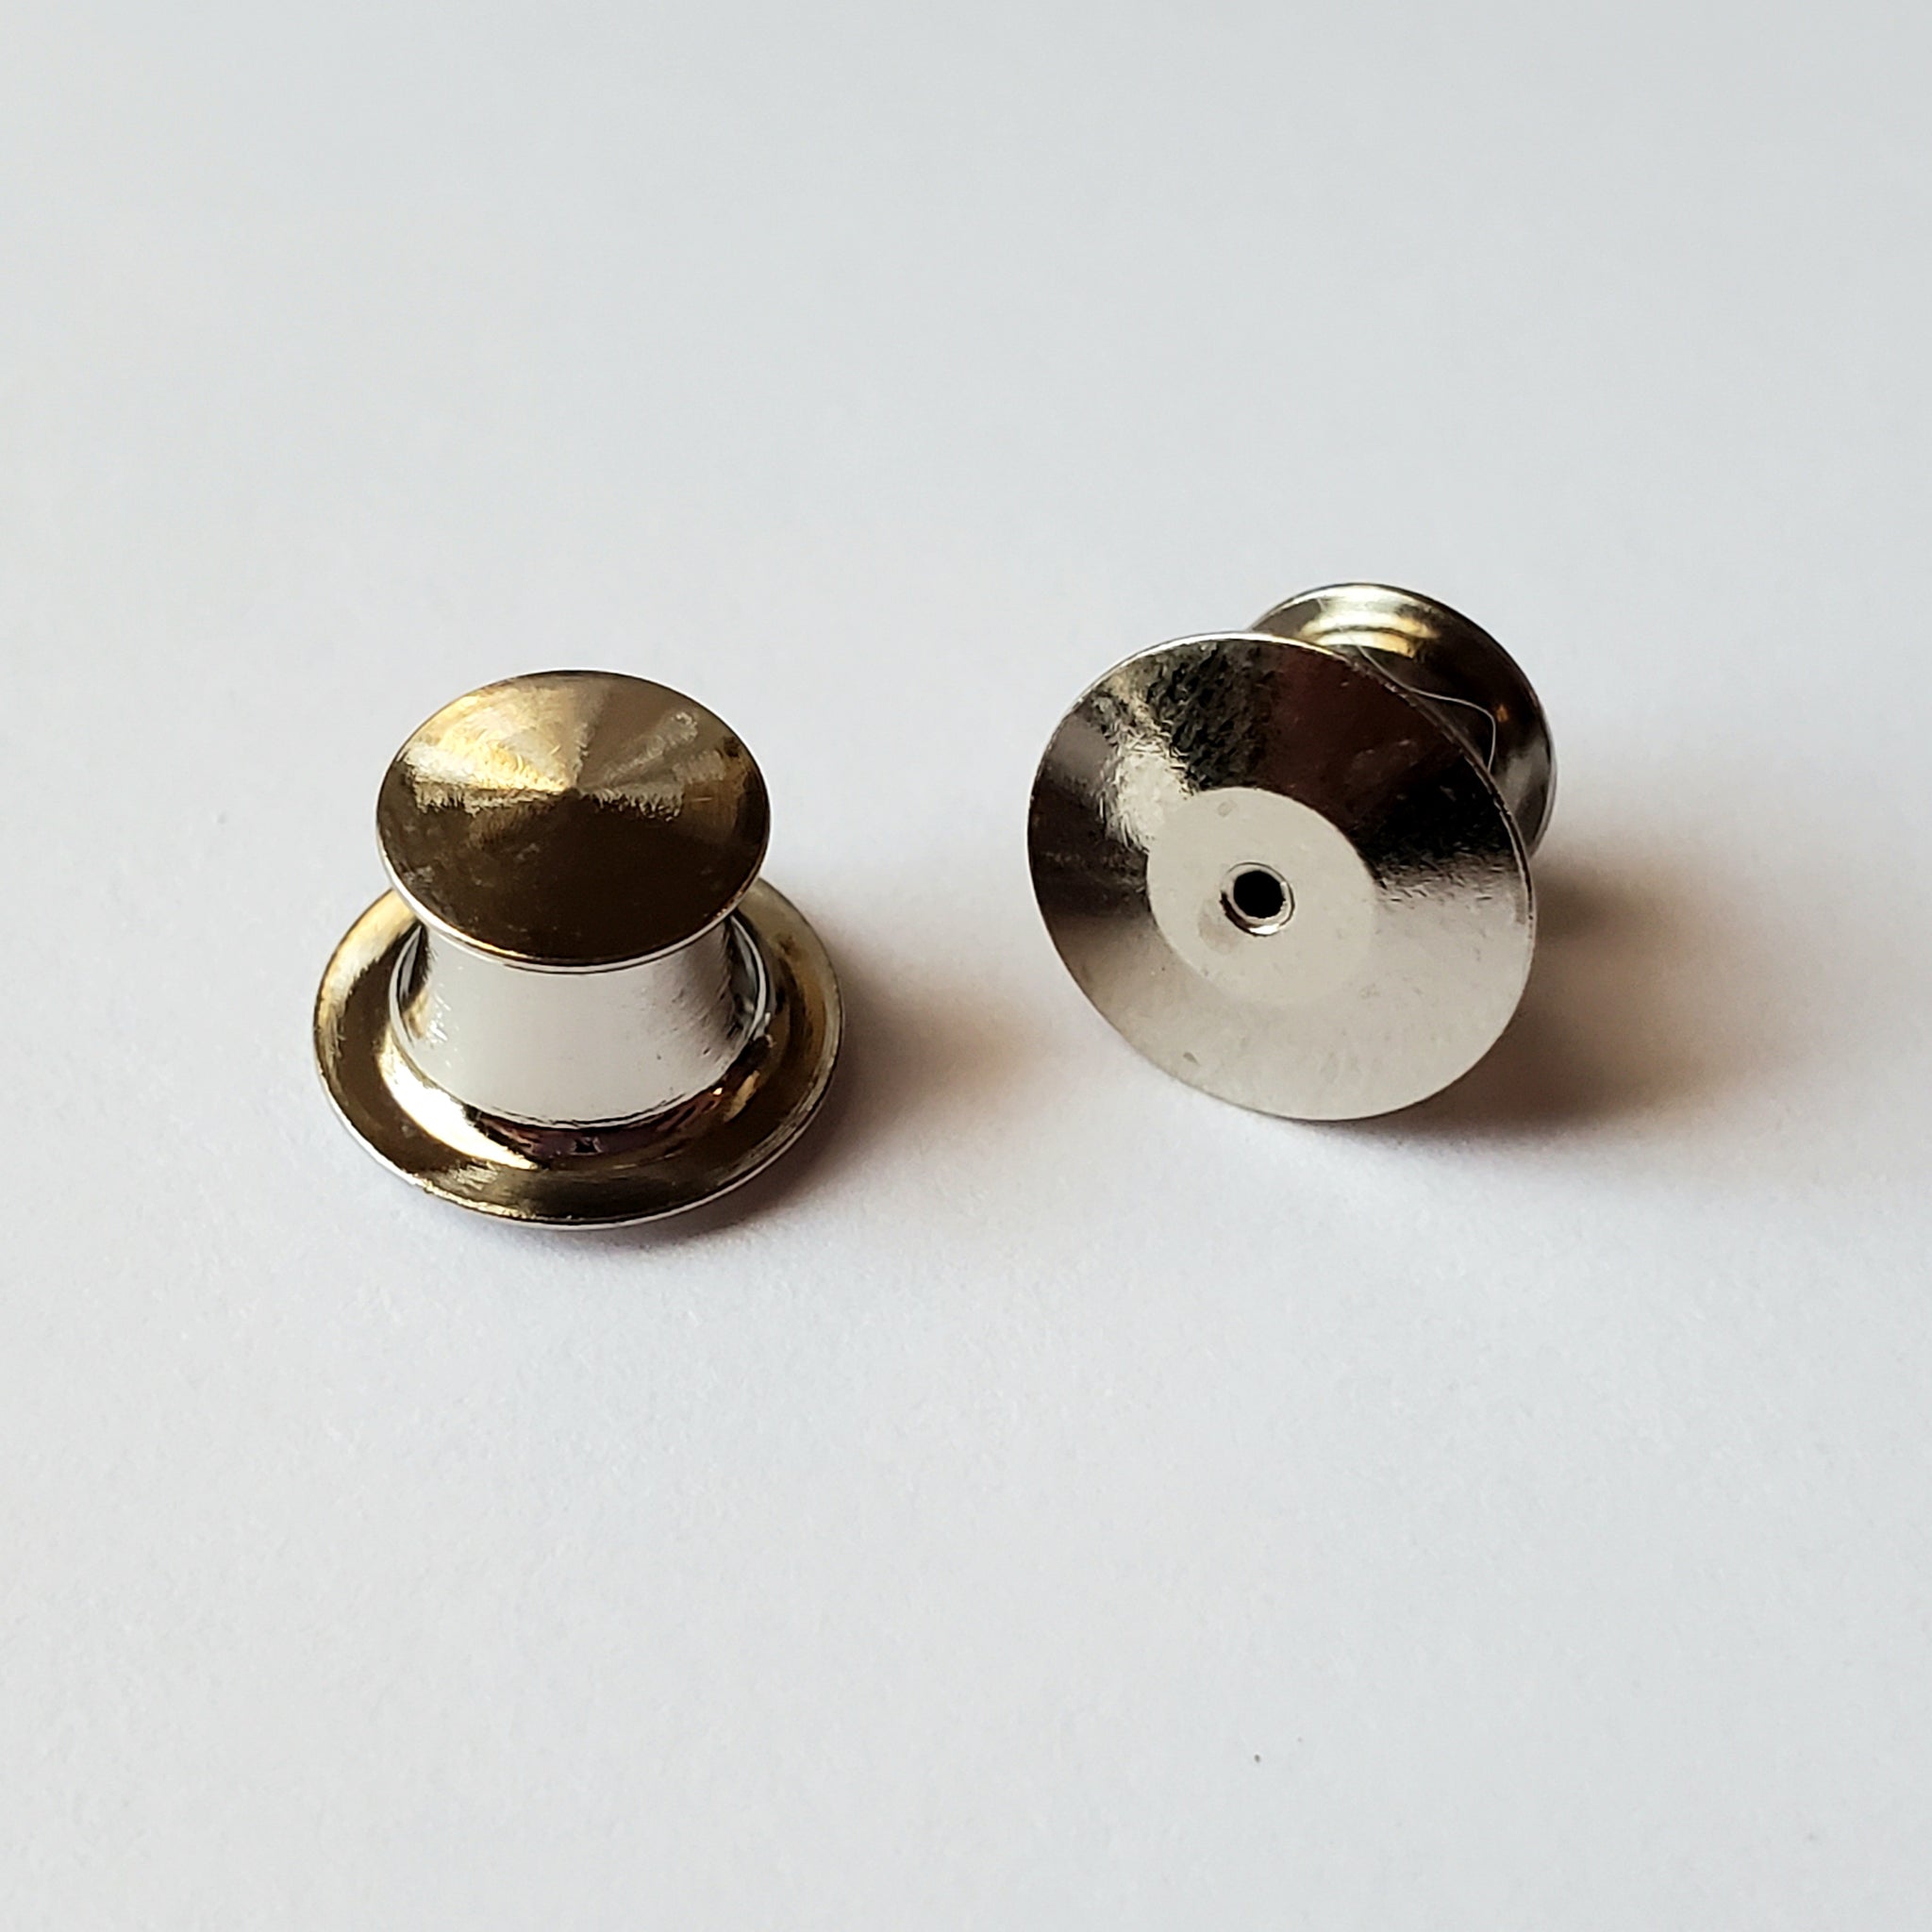 Locking Pin Backs Upgrade – All the Dwagons